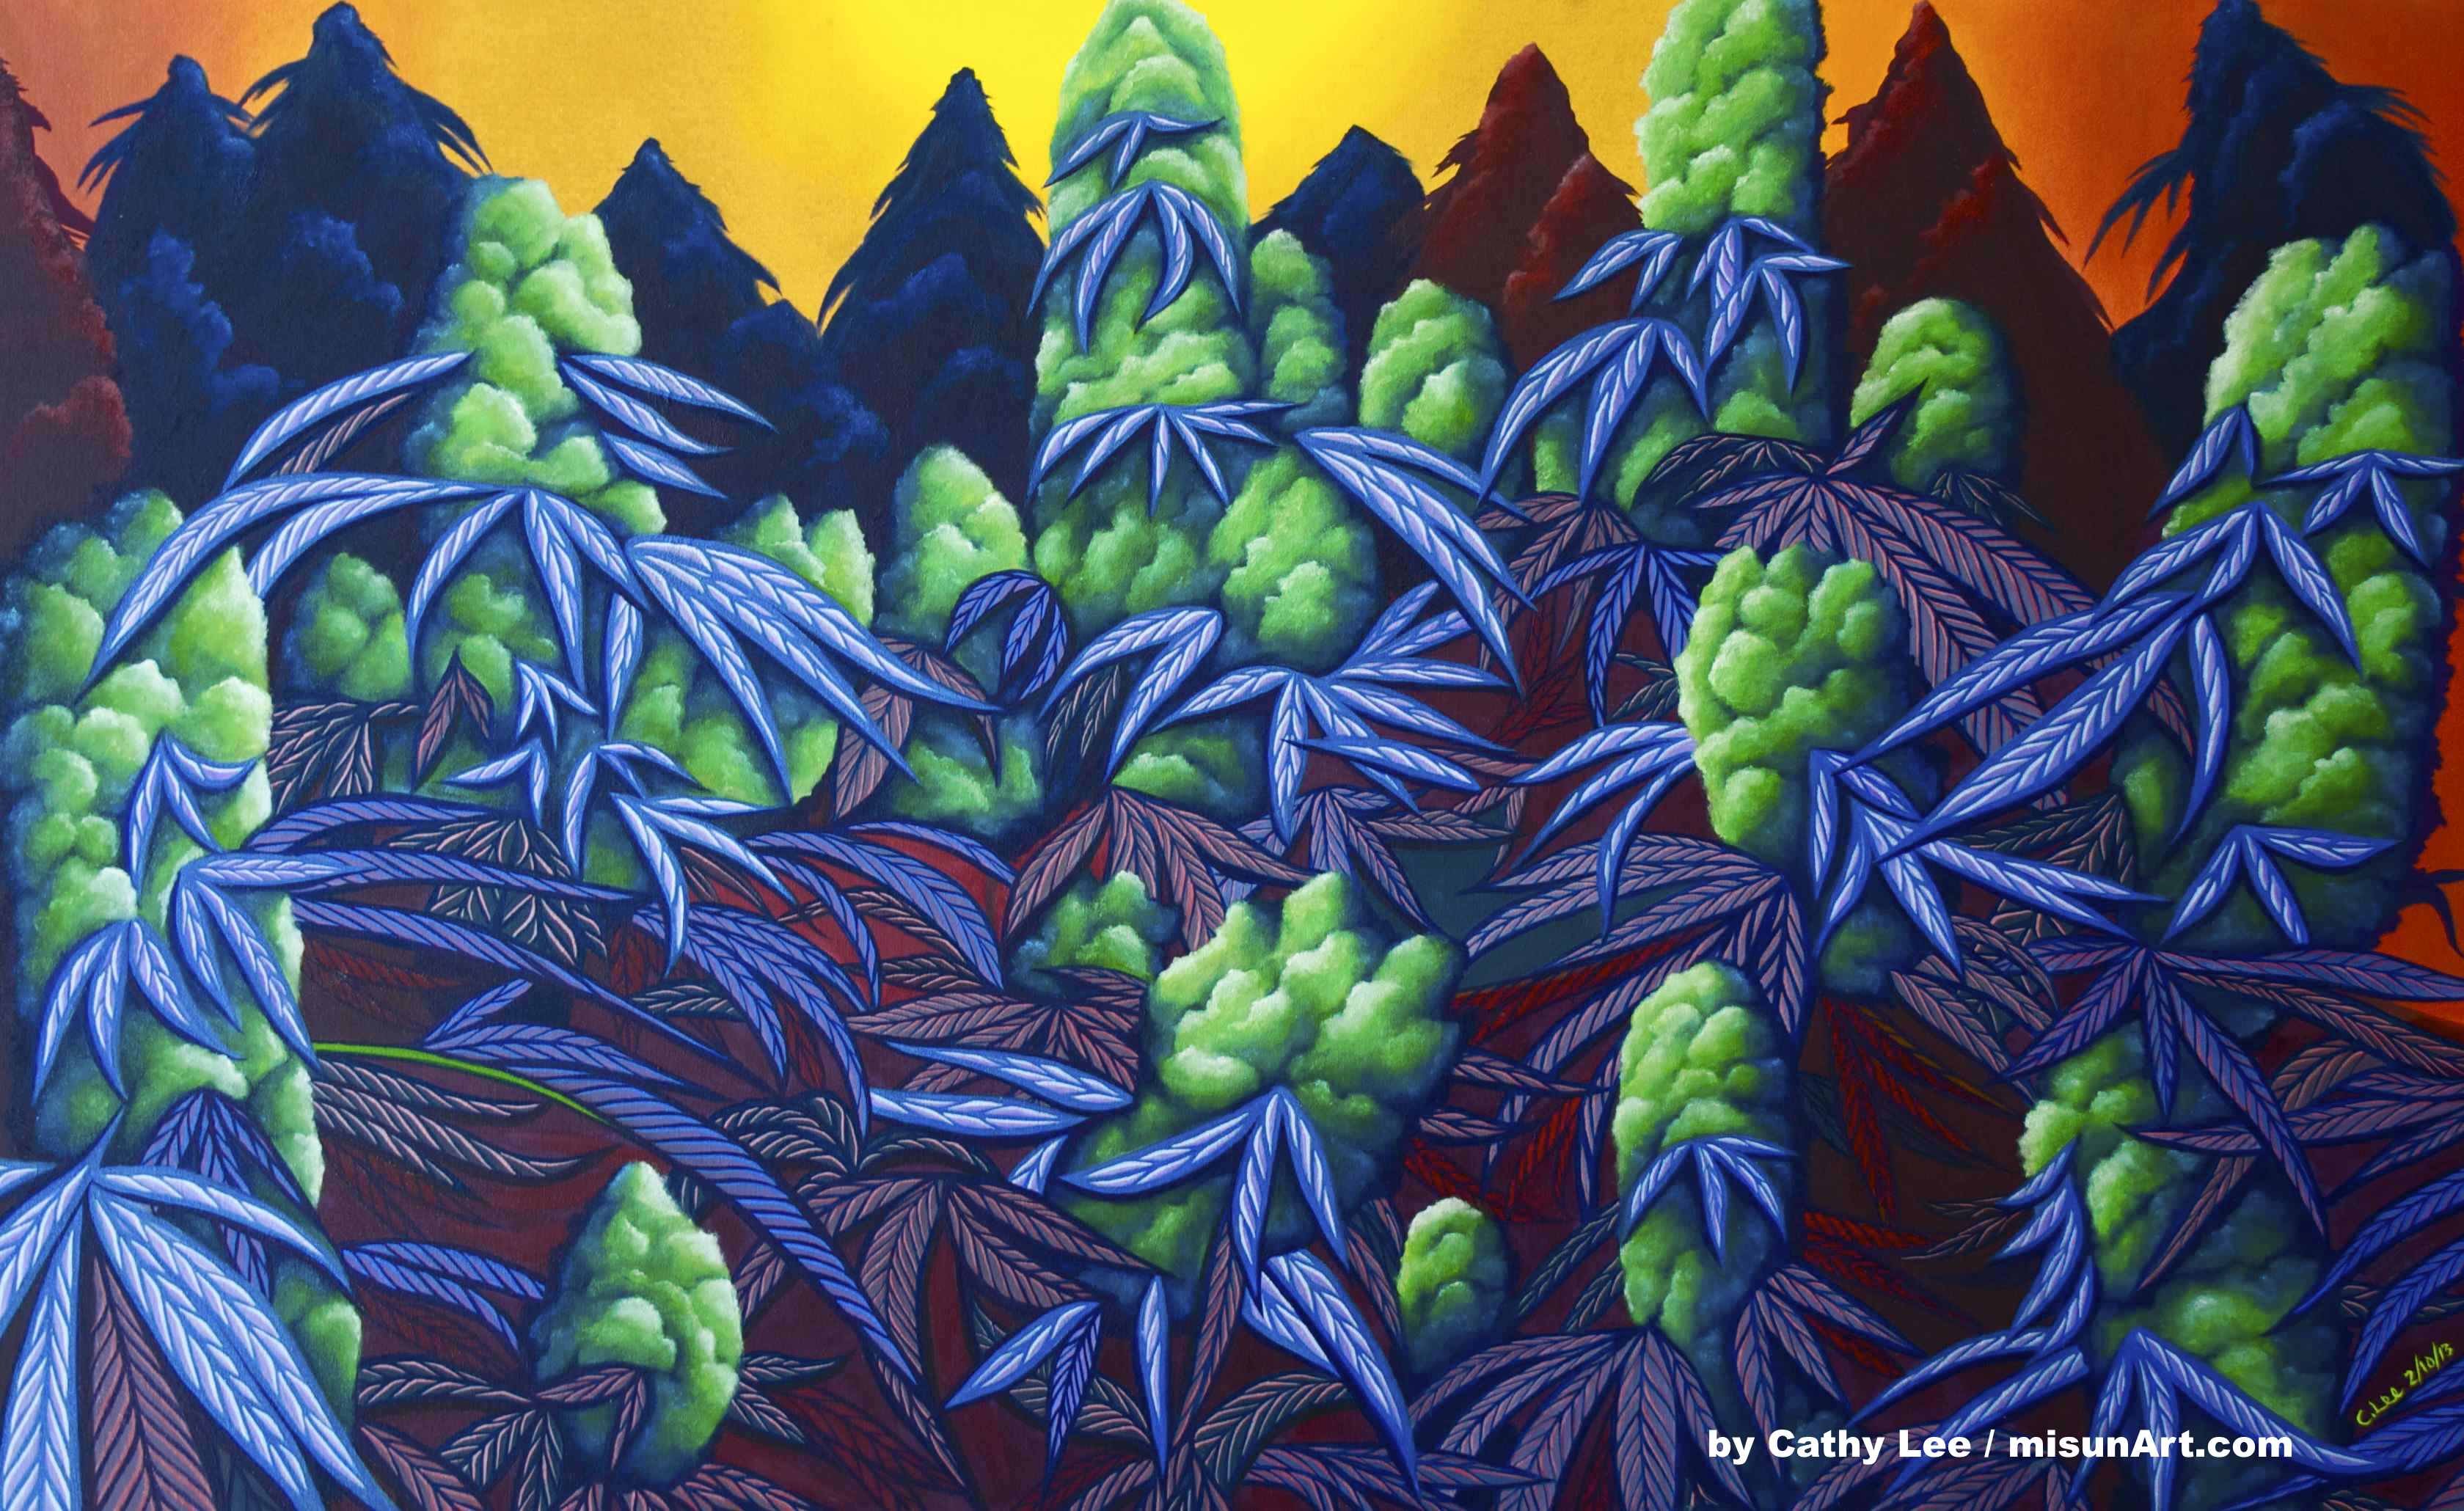 420 marijuana weed drugs art artwork psychedelic wallpaper ...